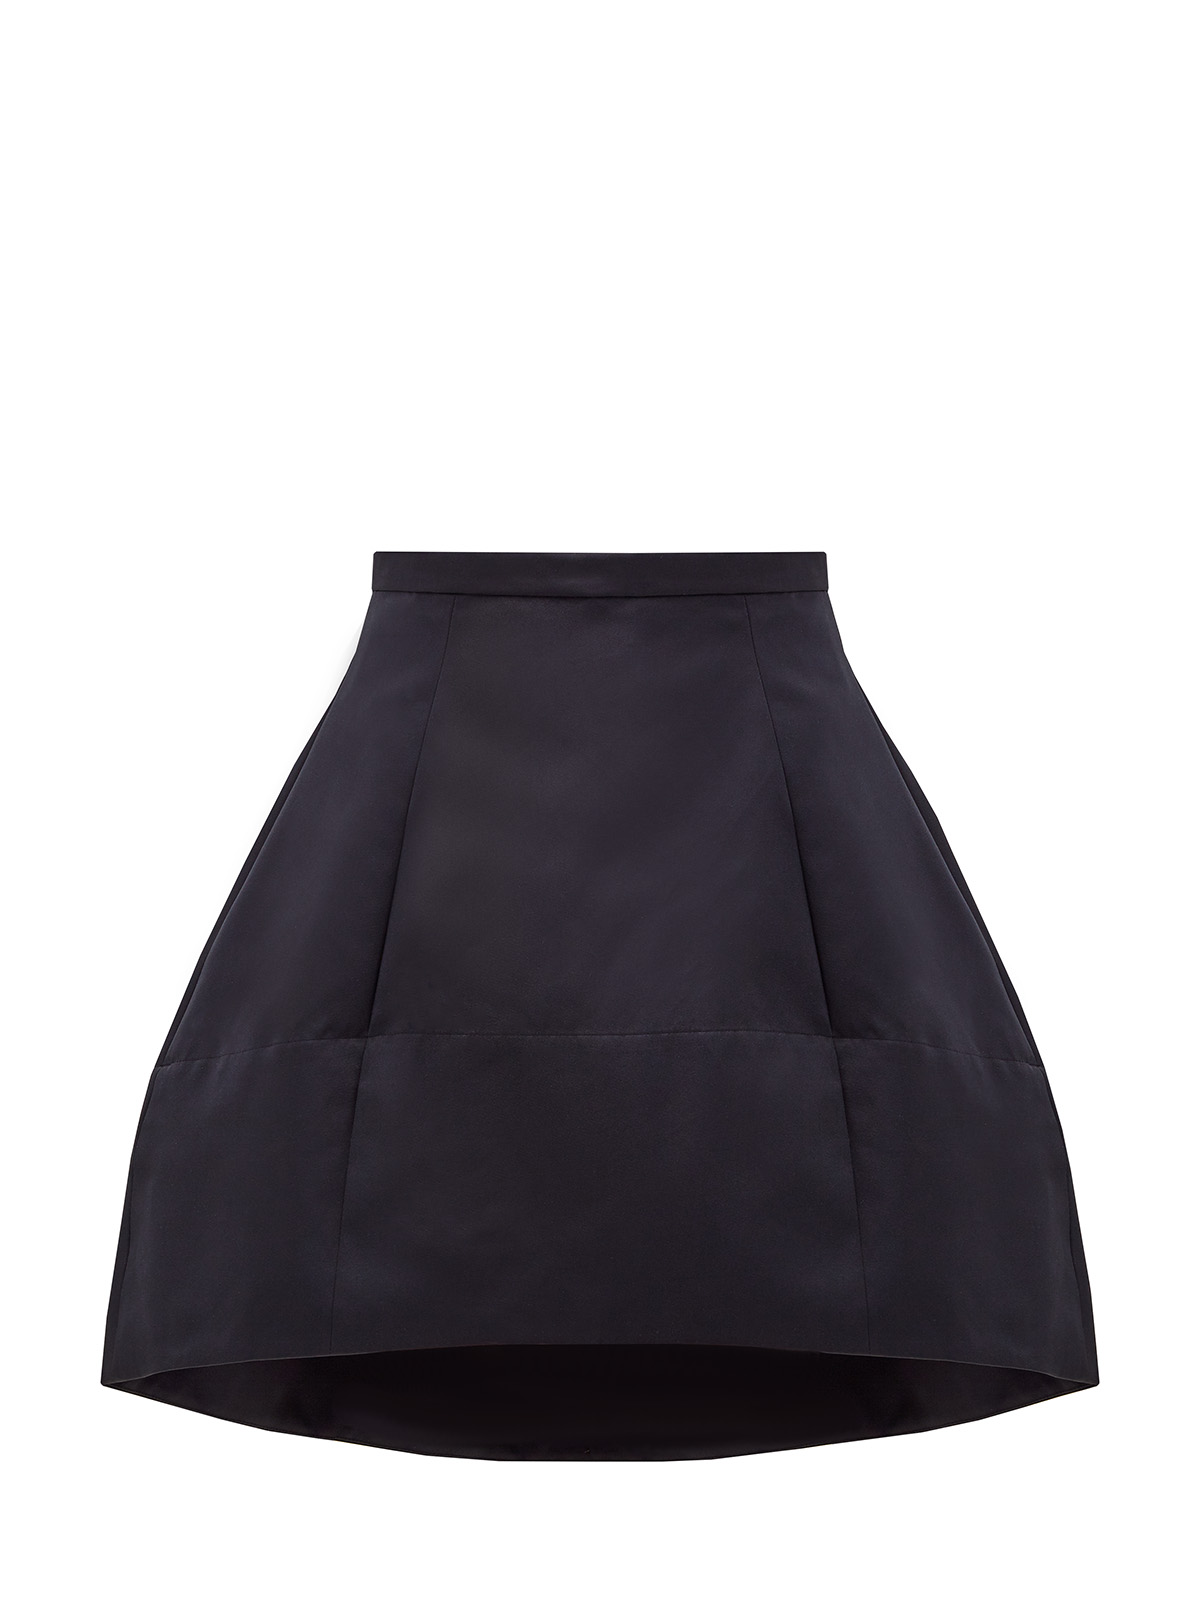 Асимметричная юбка-мини из плотного кади ROCHAS черного цвета